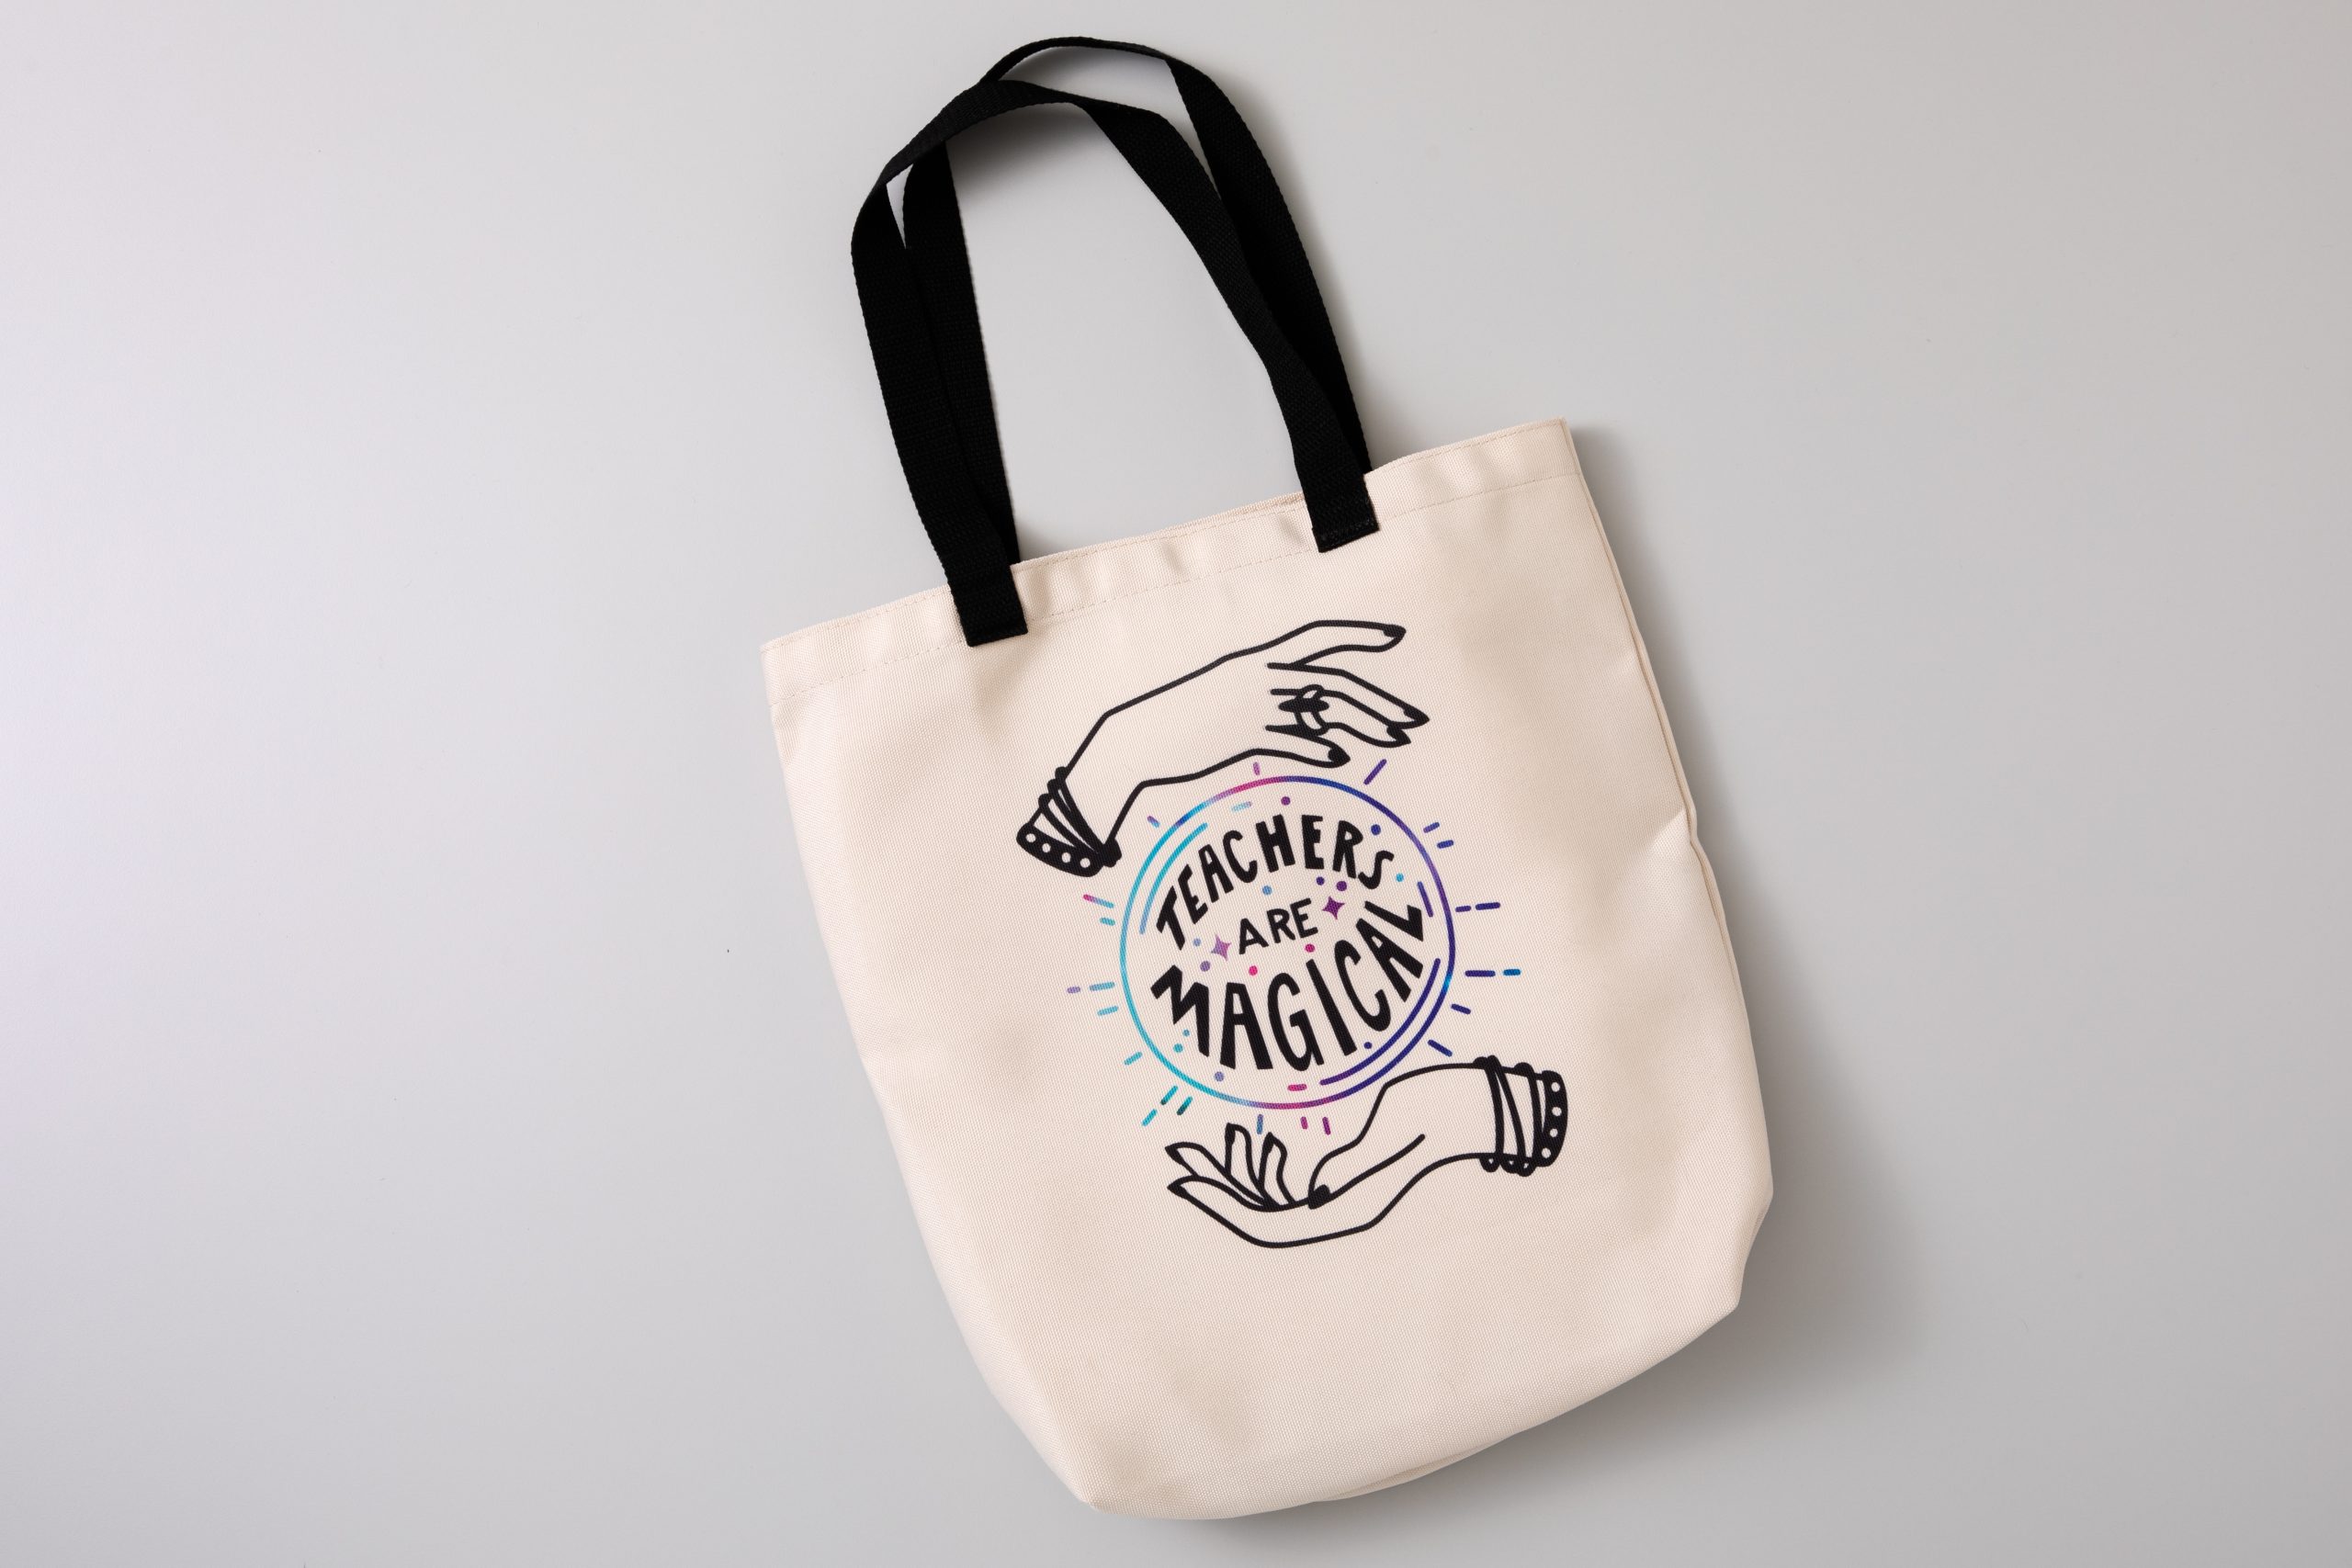 Teacher personalised gift idea - tote bag